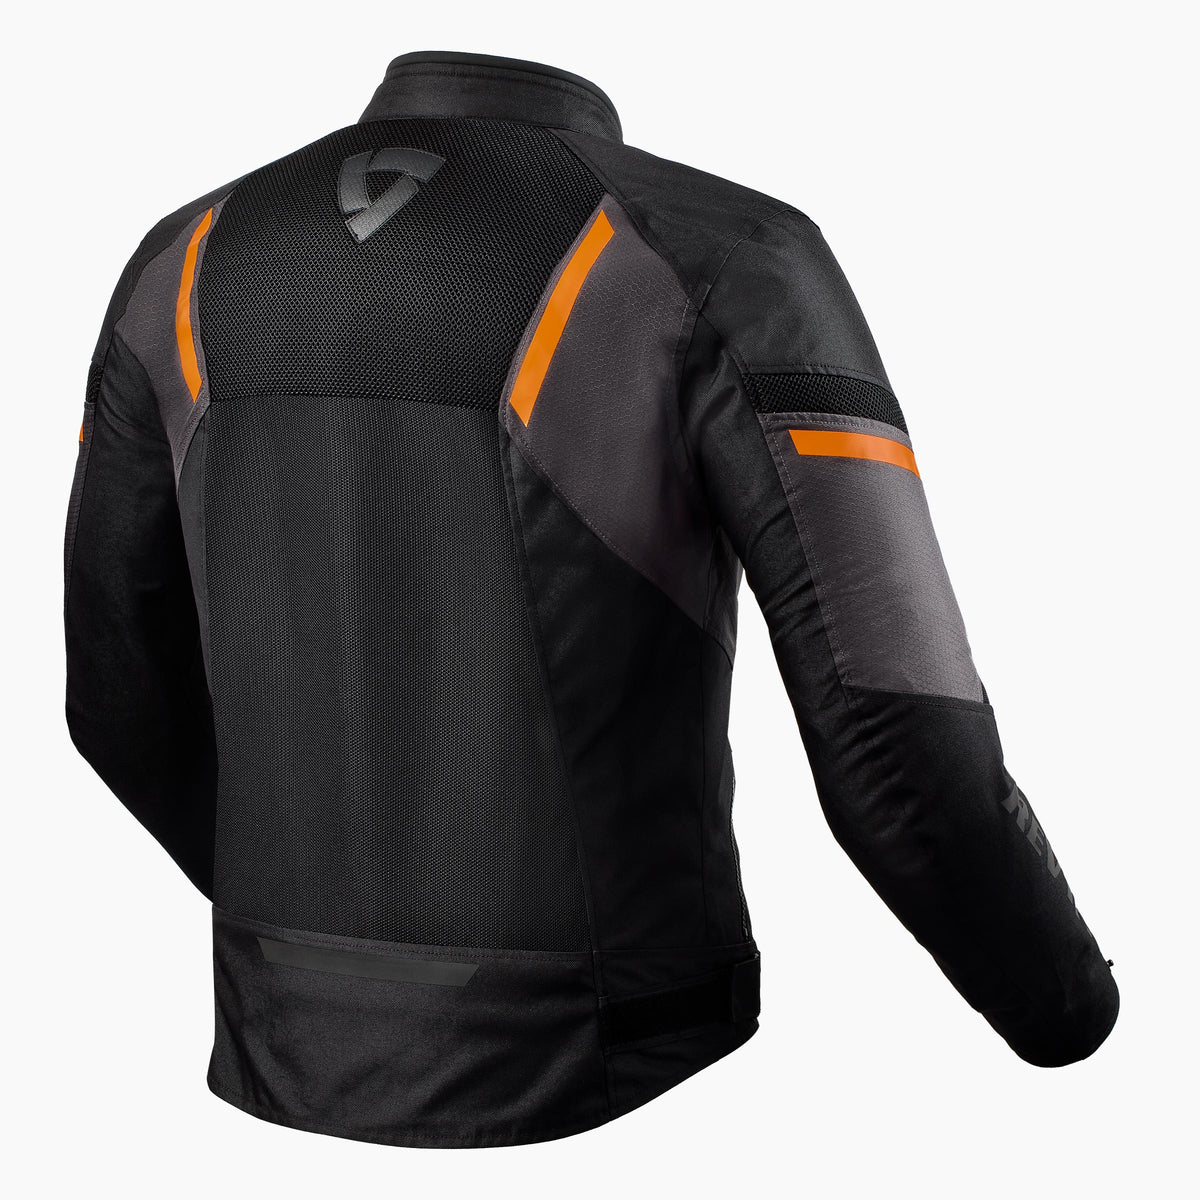 RevIt GT-R Air 3 Jacket Black/Neon Orange